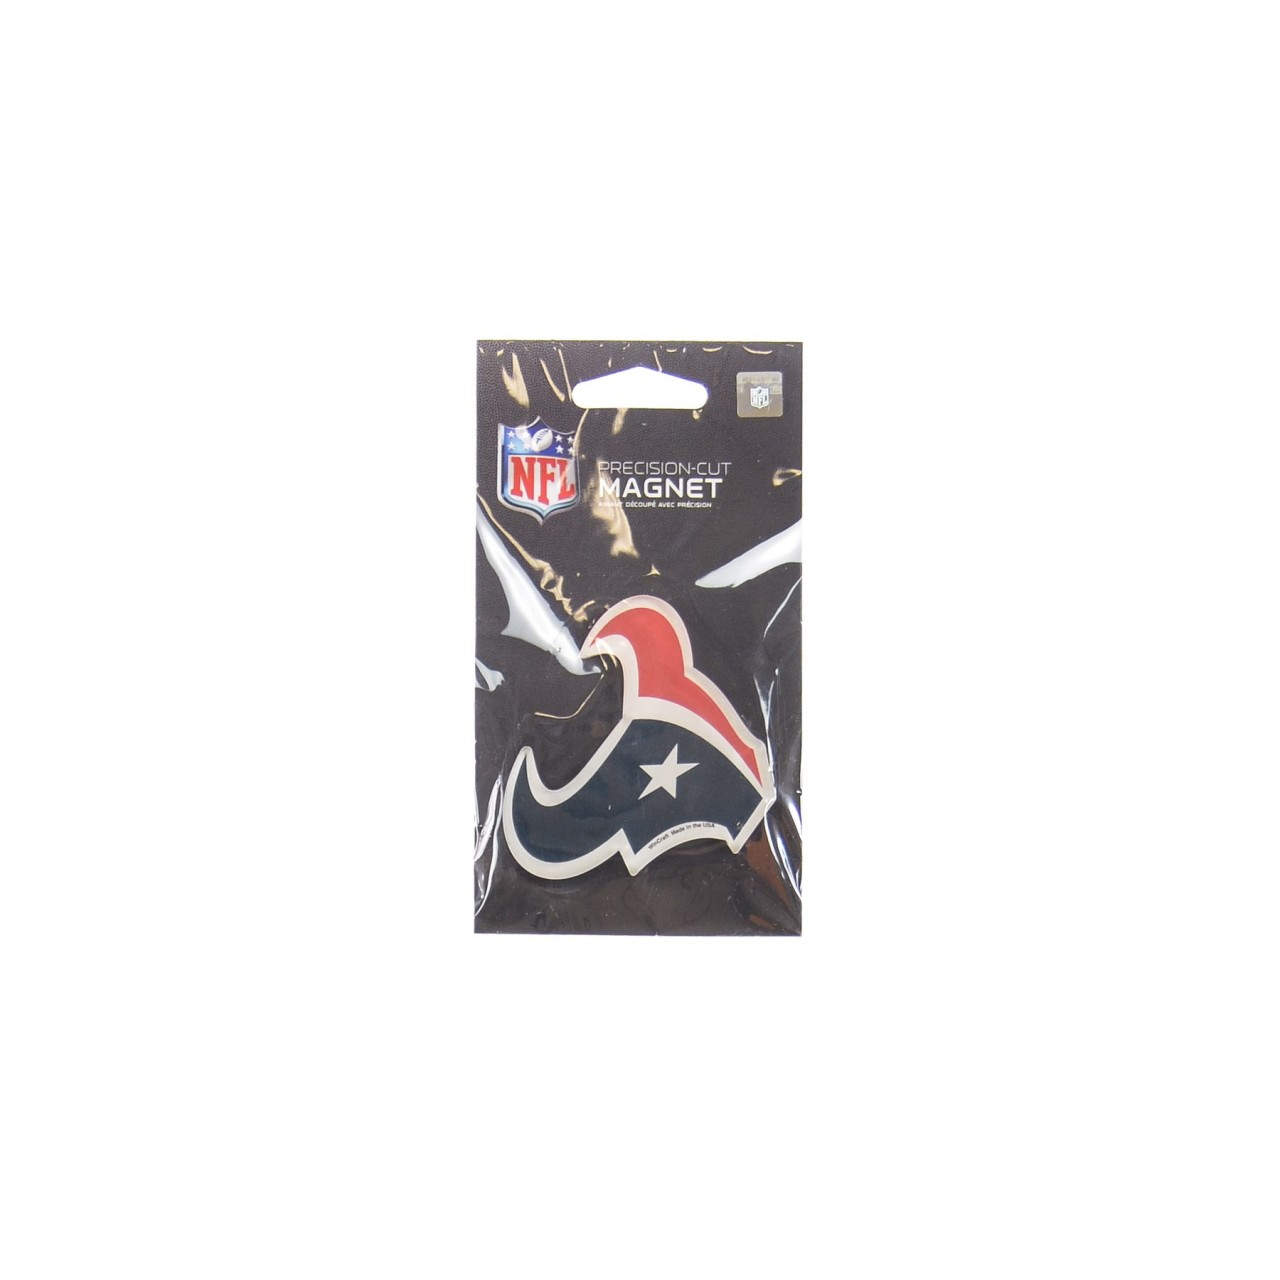 WINCRAFT NFL MAGNET LOGO HOUTEX 100032085206664